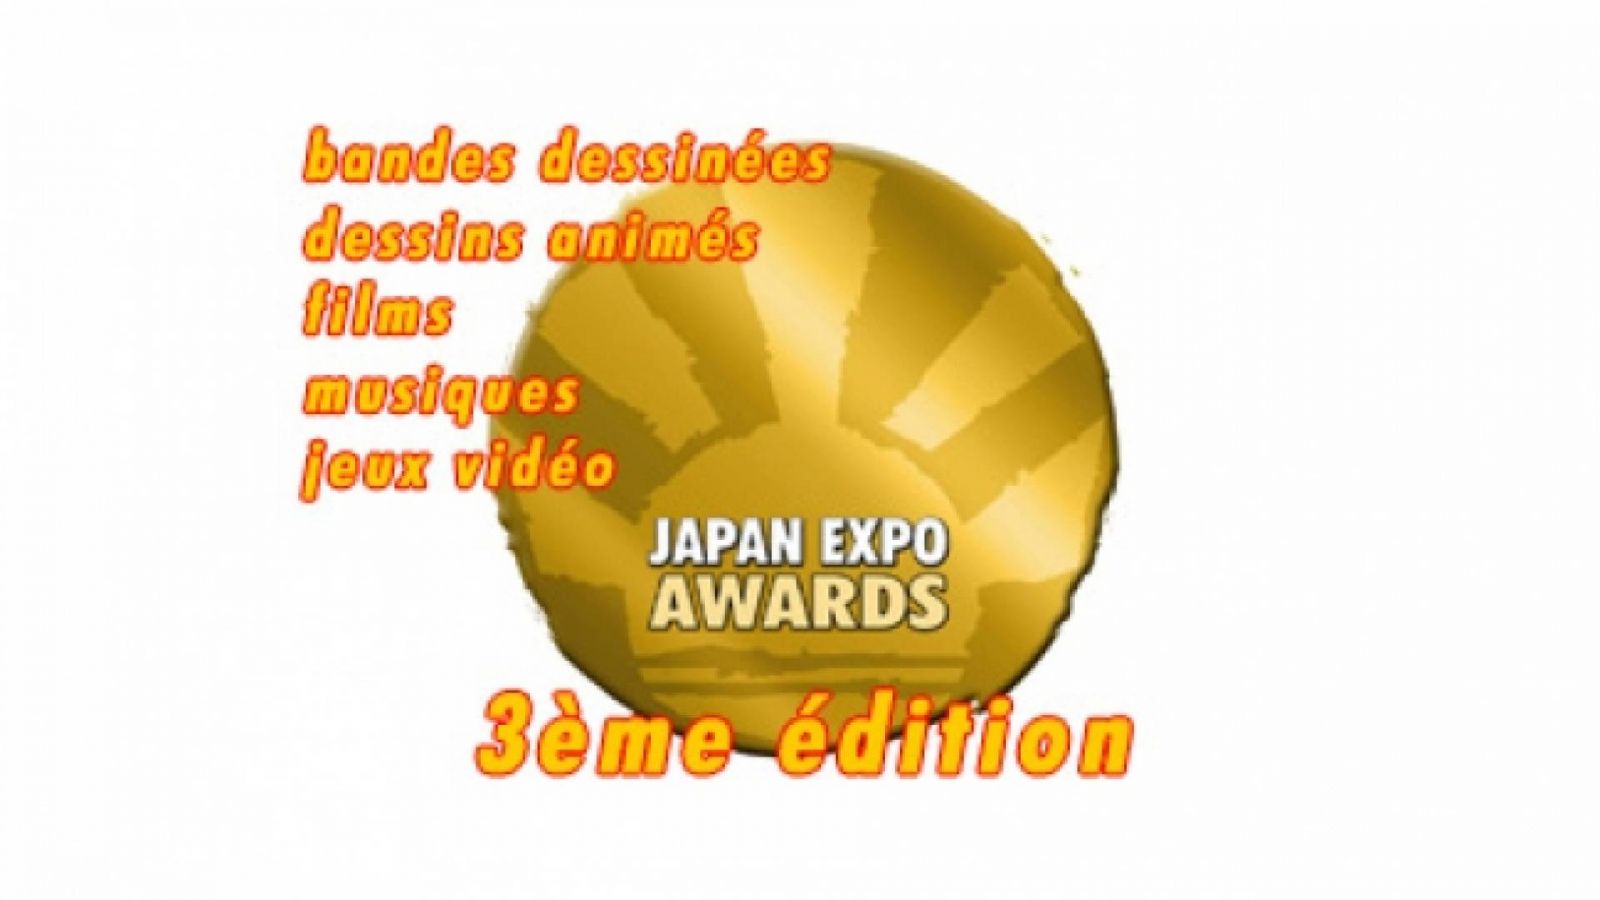 Japan Expo Awards 2008 © SEFA 2008